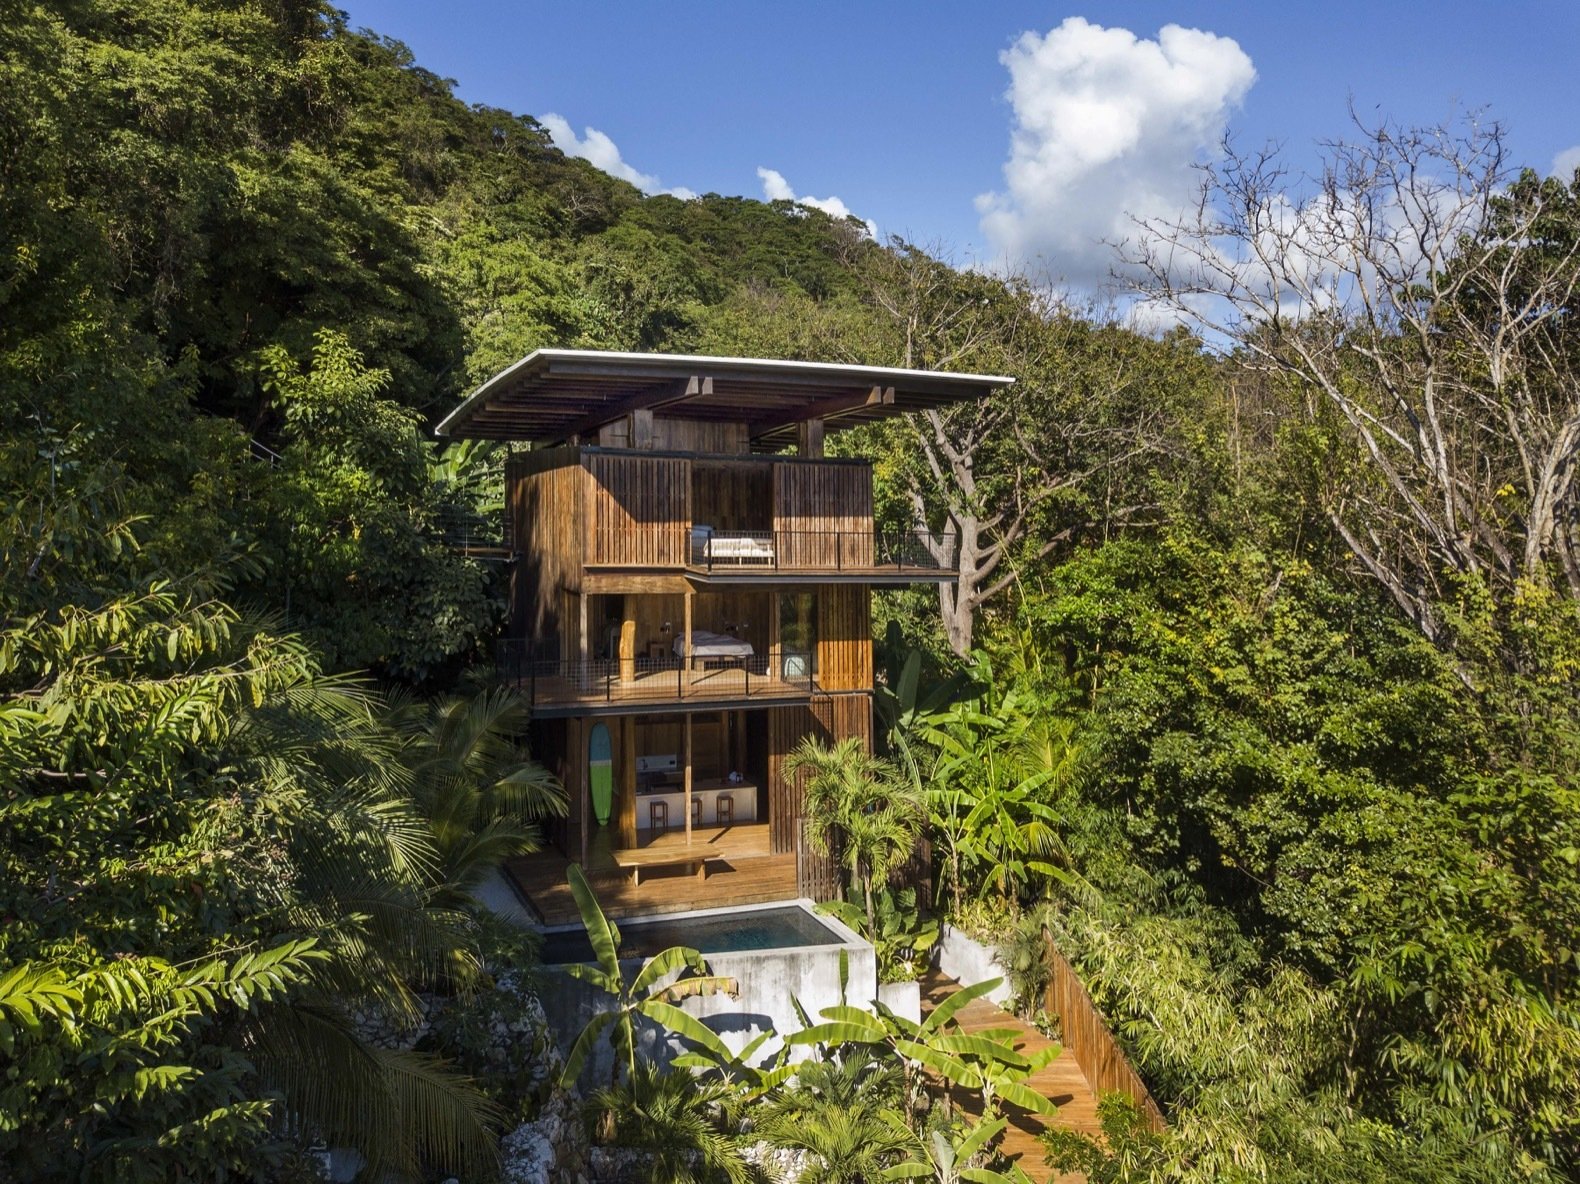 An Olson Kundig Tree House Peeks Over the Treetops in Costa Rica